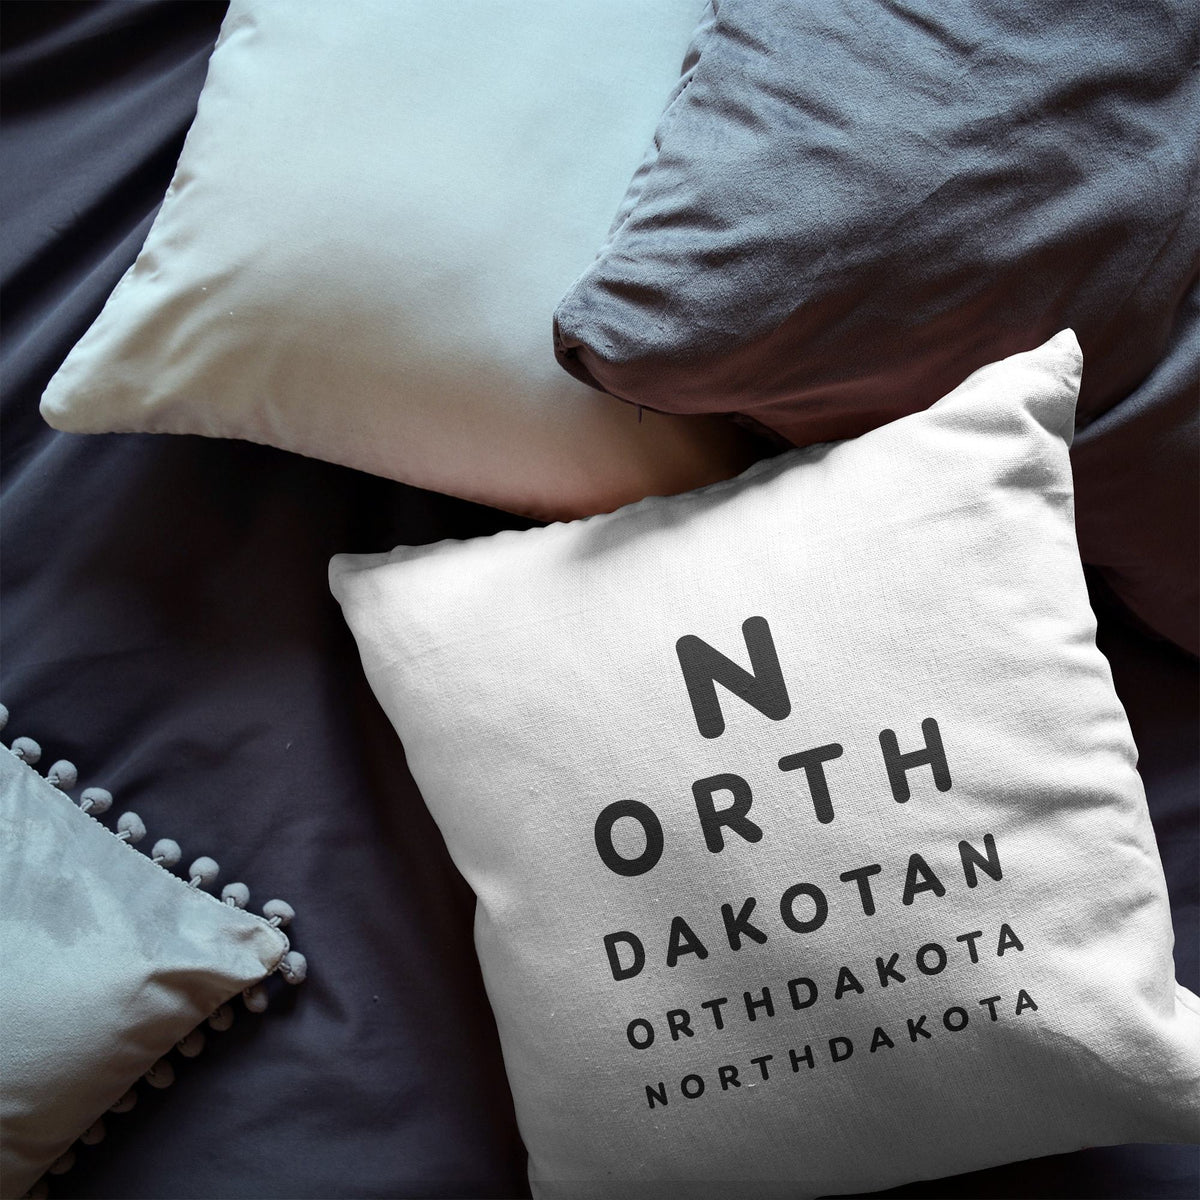 North Dakota &quot;Eye Exam&quot; Throw Pillow